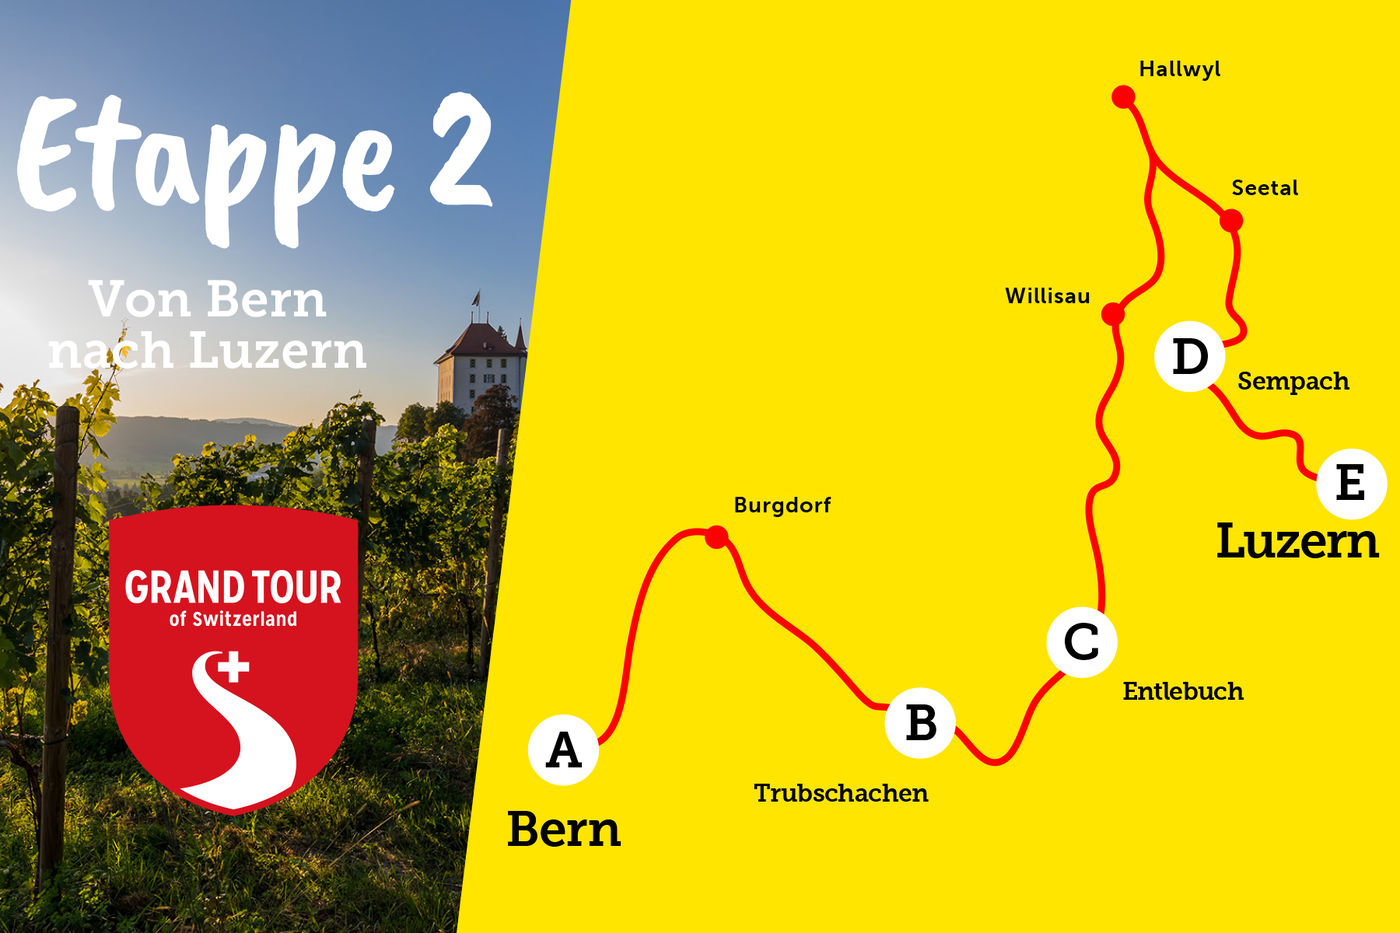 Route Etappe 2 Bern bis Luzern